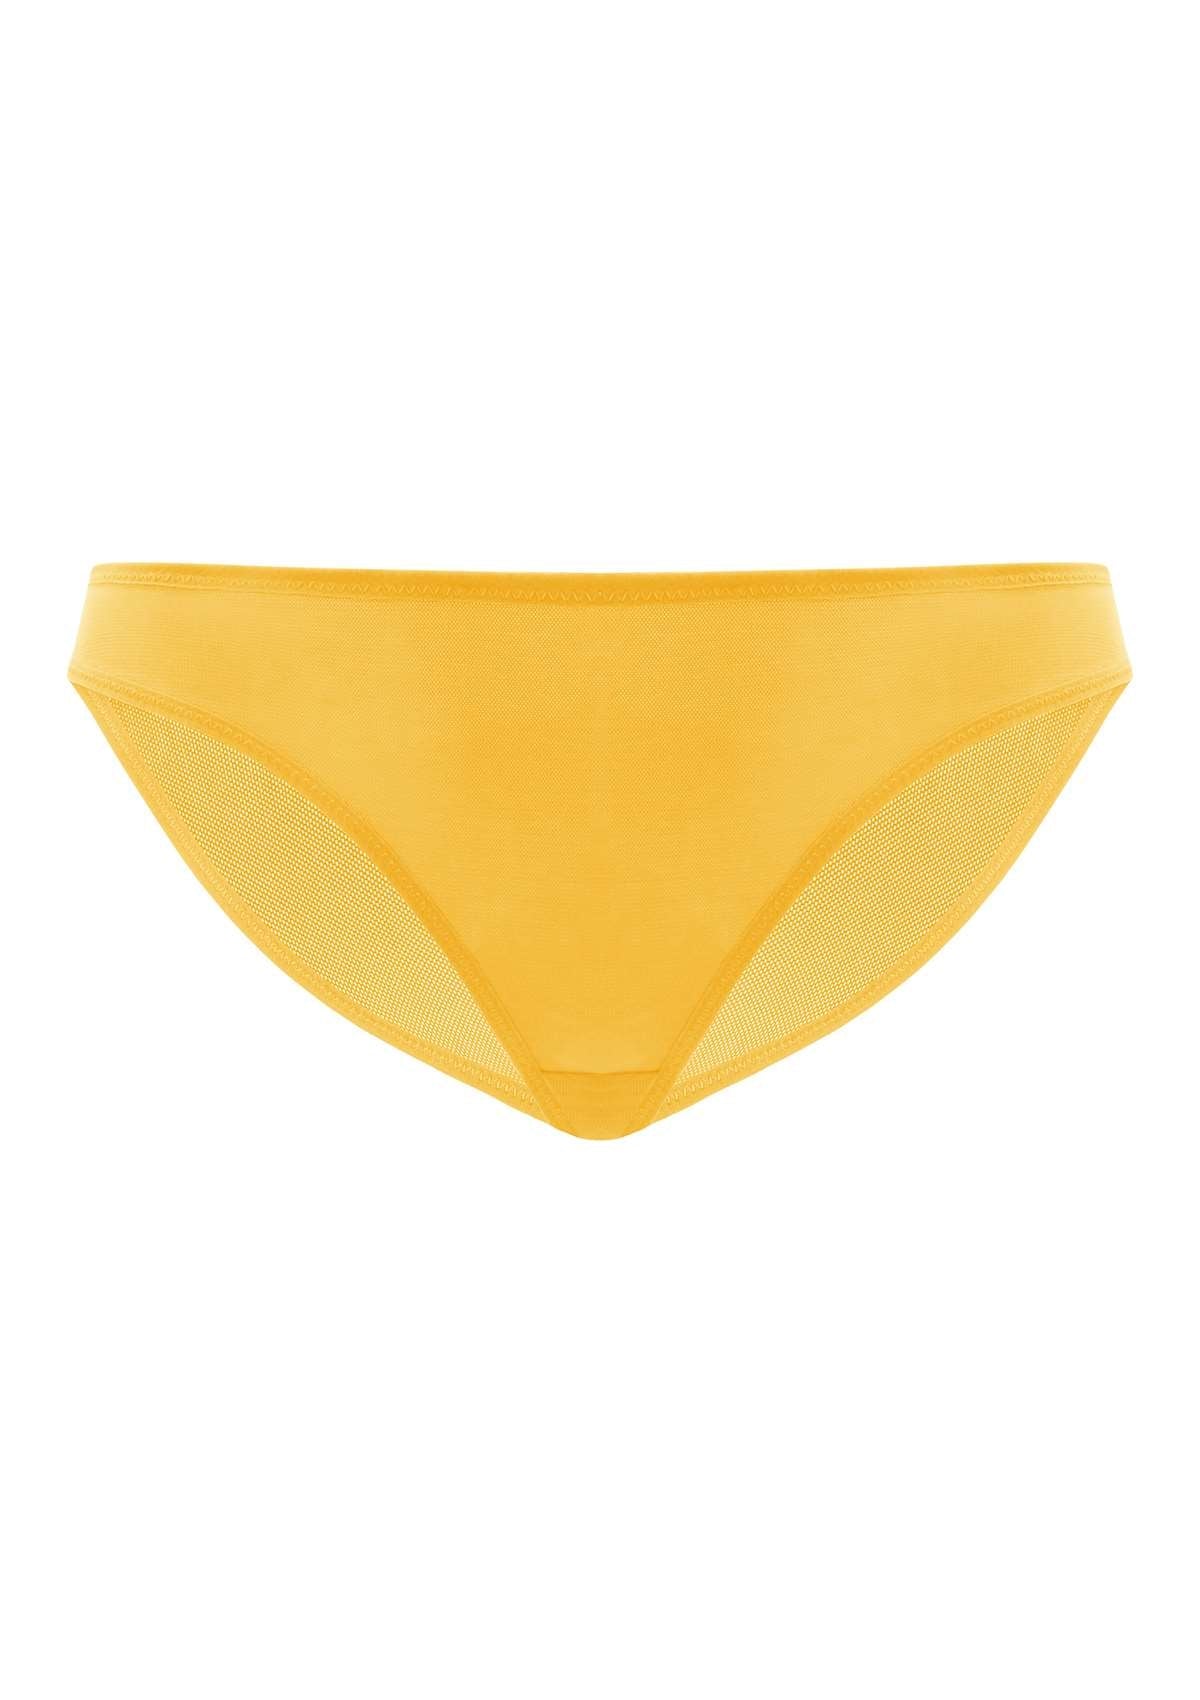 HSIA Billie Smooth Sheer Mesh Lightweight Soft Comfy Bikini Underwear - S / Yellow